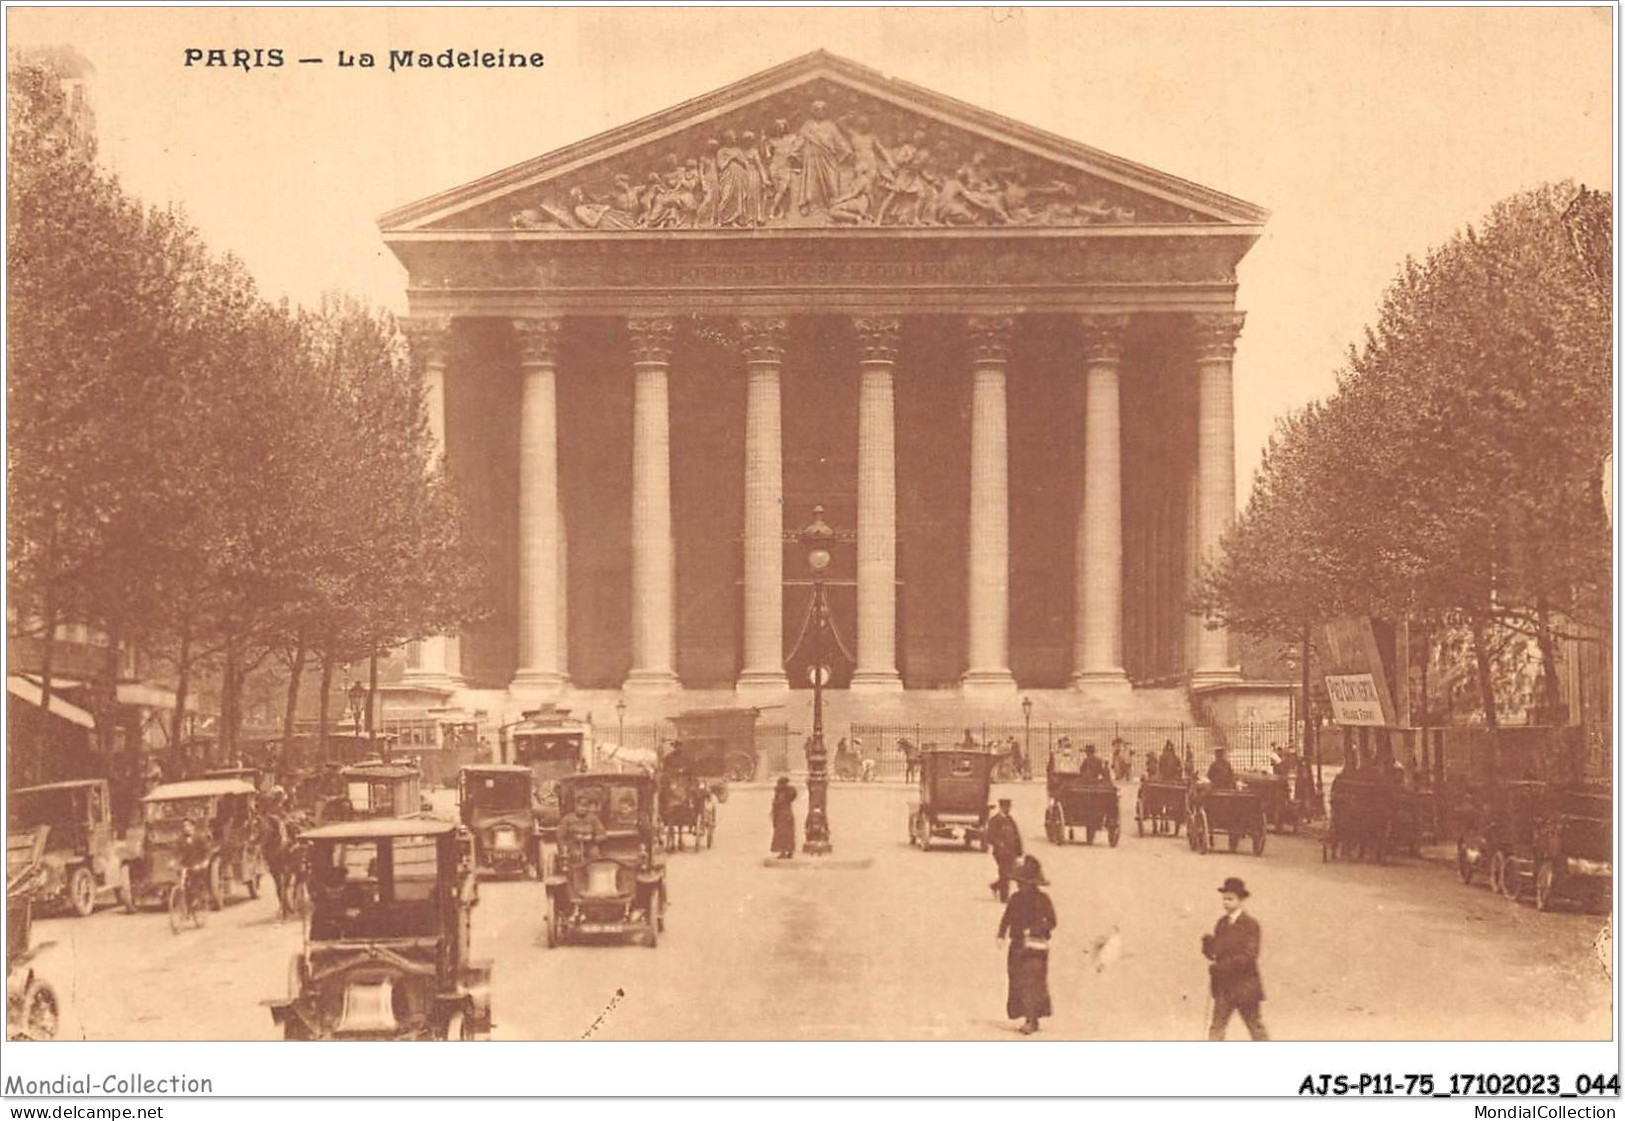 AJSP11-75-1040 - PARIS - La Madeleine - Churches